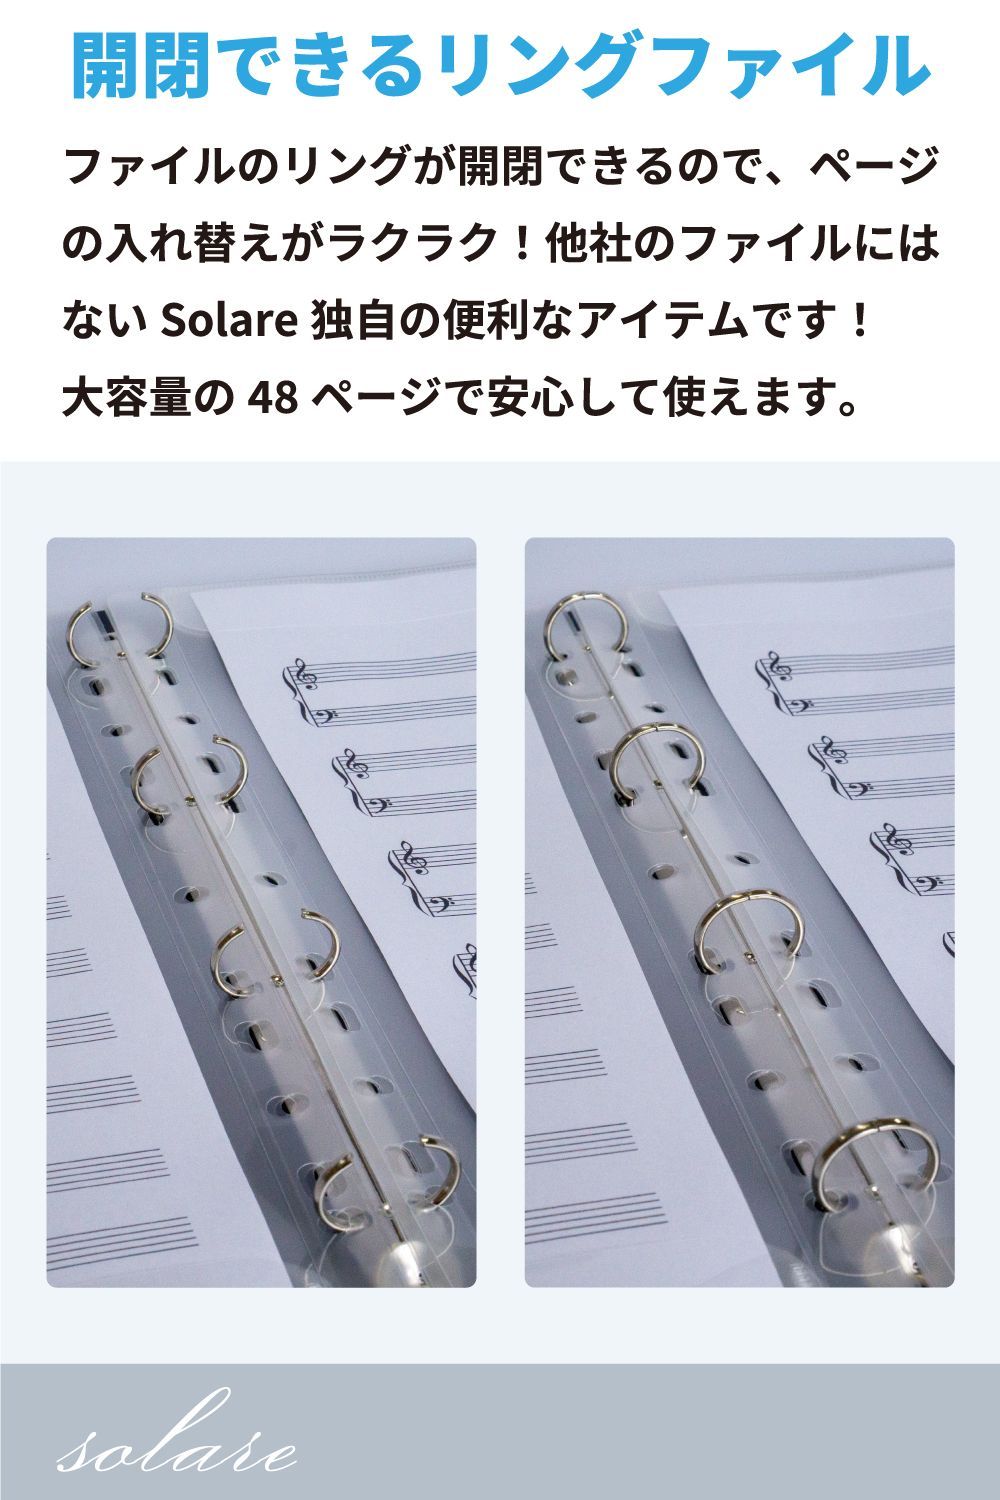 Solare 楽譜ファイル 楽譜用ファイル 譜面ファイル 書き込める 楽譜入れ A4 4面 バンドファイル 国内初の直営店 - デジタル楽器